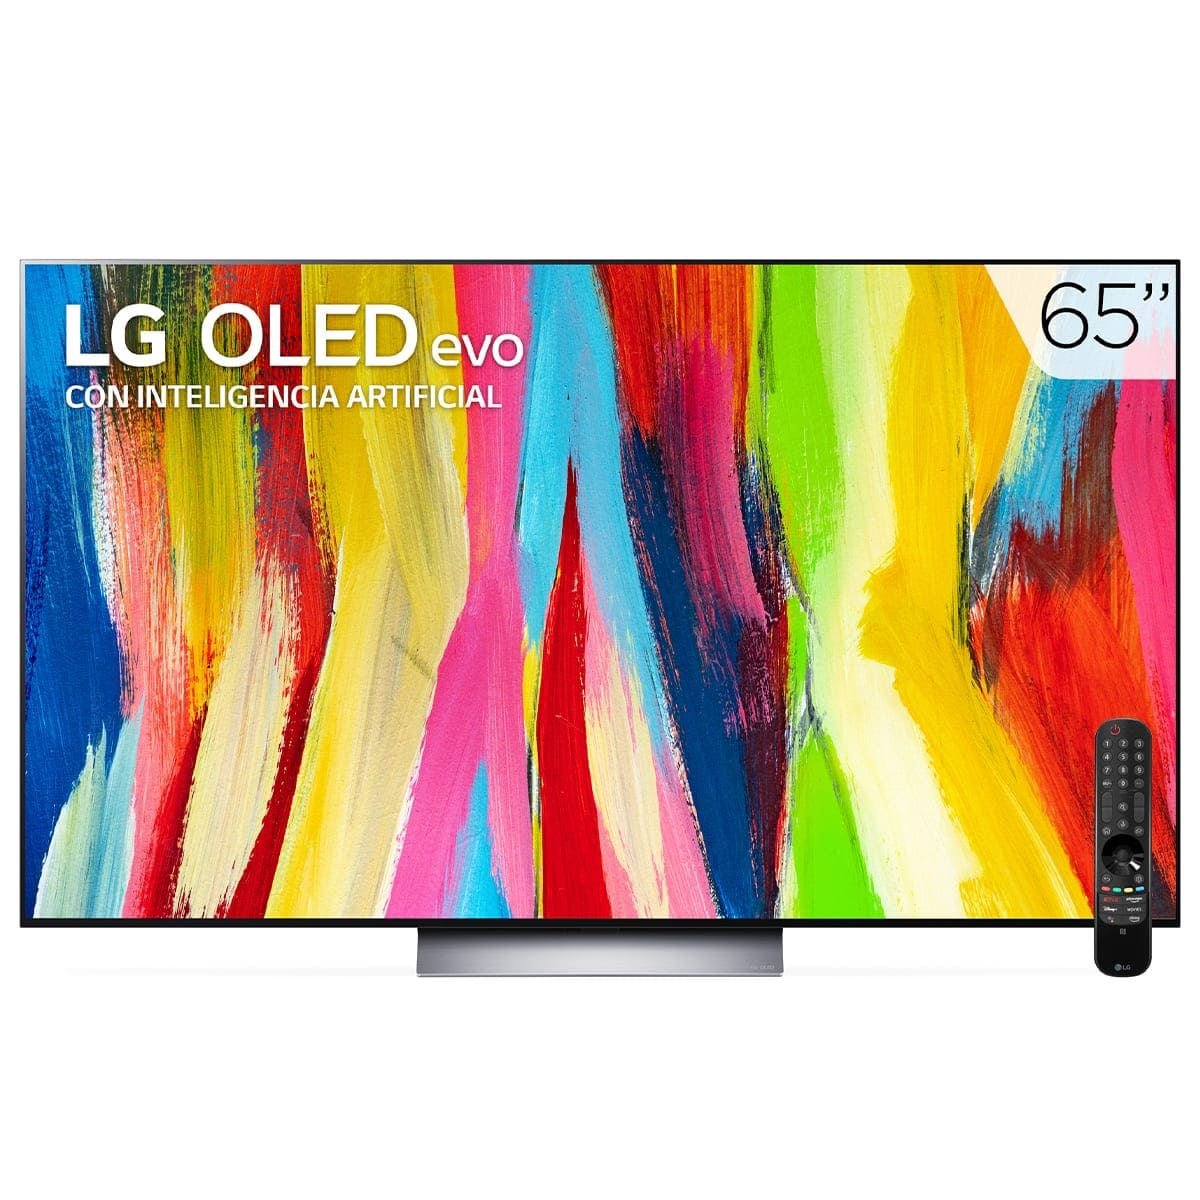 Pantalla LG Smart TV 32LQ630BPSA 32 pulg. AI ThinQ HD, Pantallas, Pantallas, Audio y video, Todas, Categoría